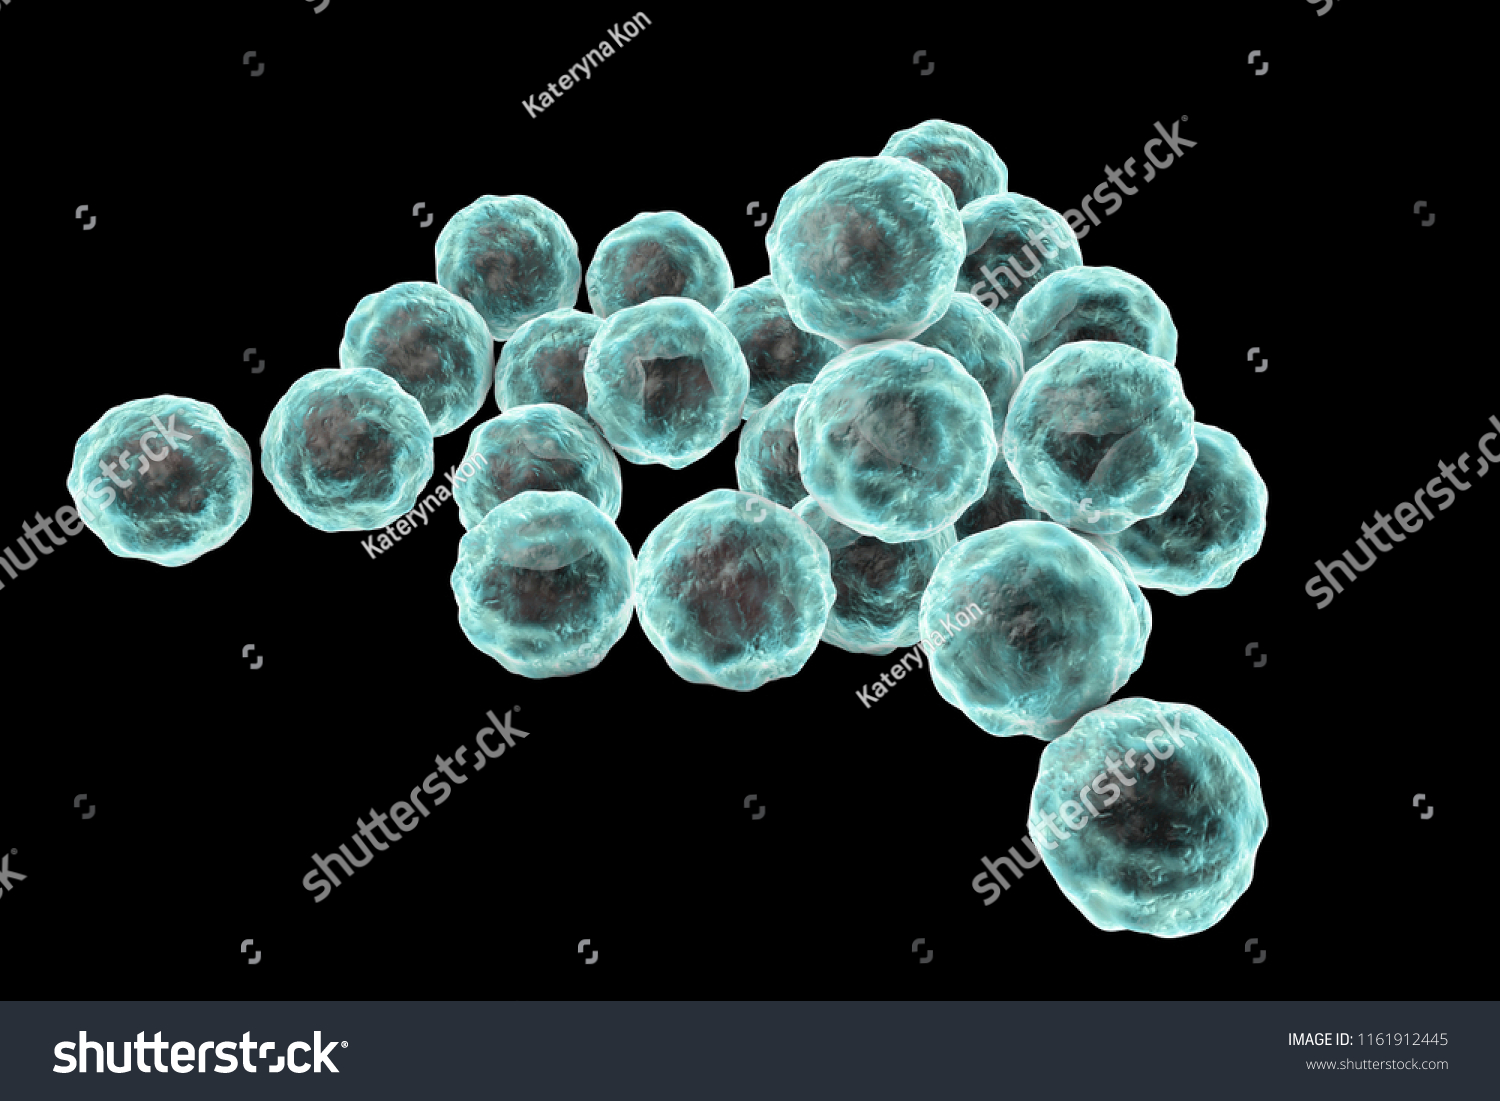 Chlamydia Trachomatis Bacteria 3d Illustration Causative Stock Illustration 1161912445 6050